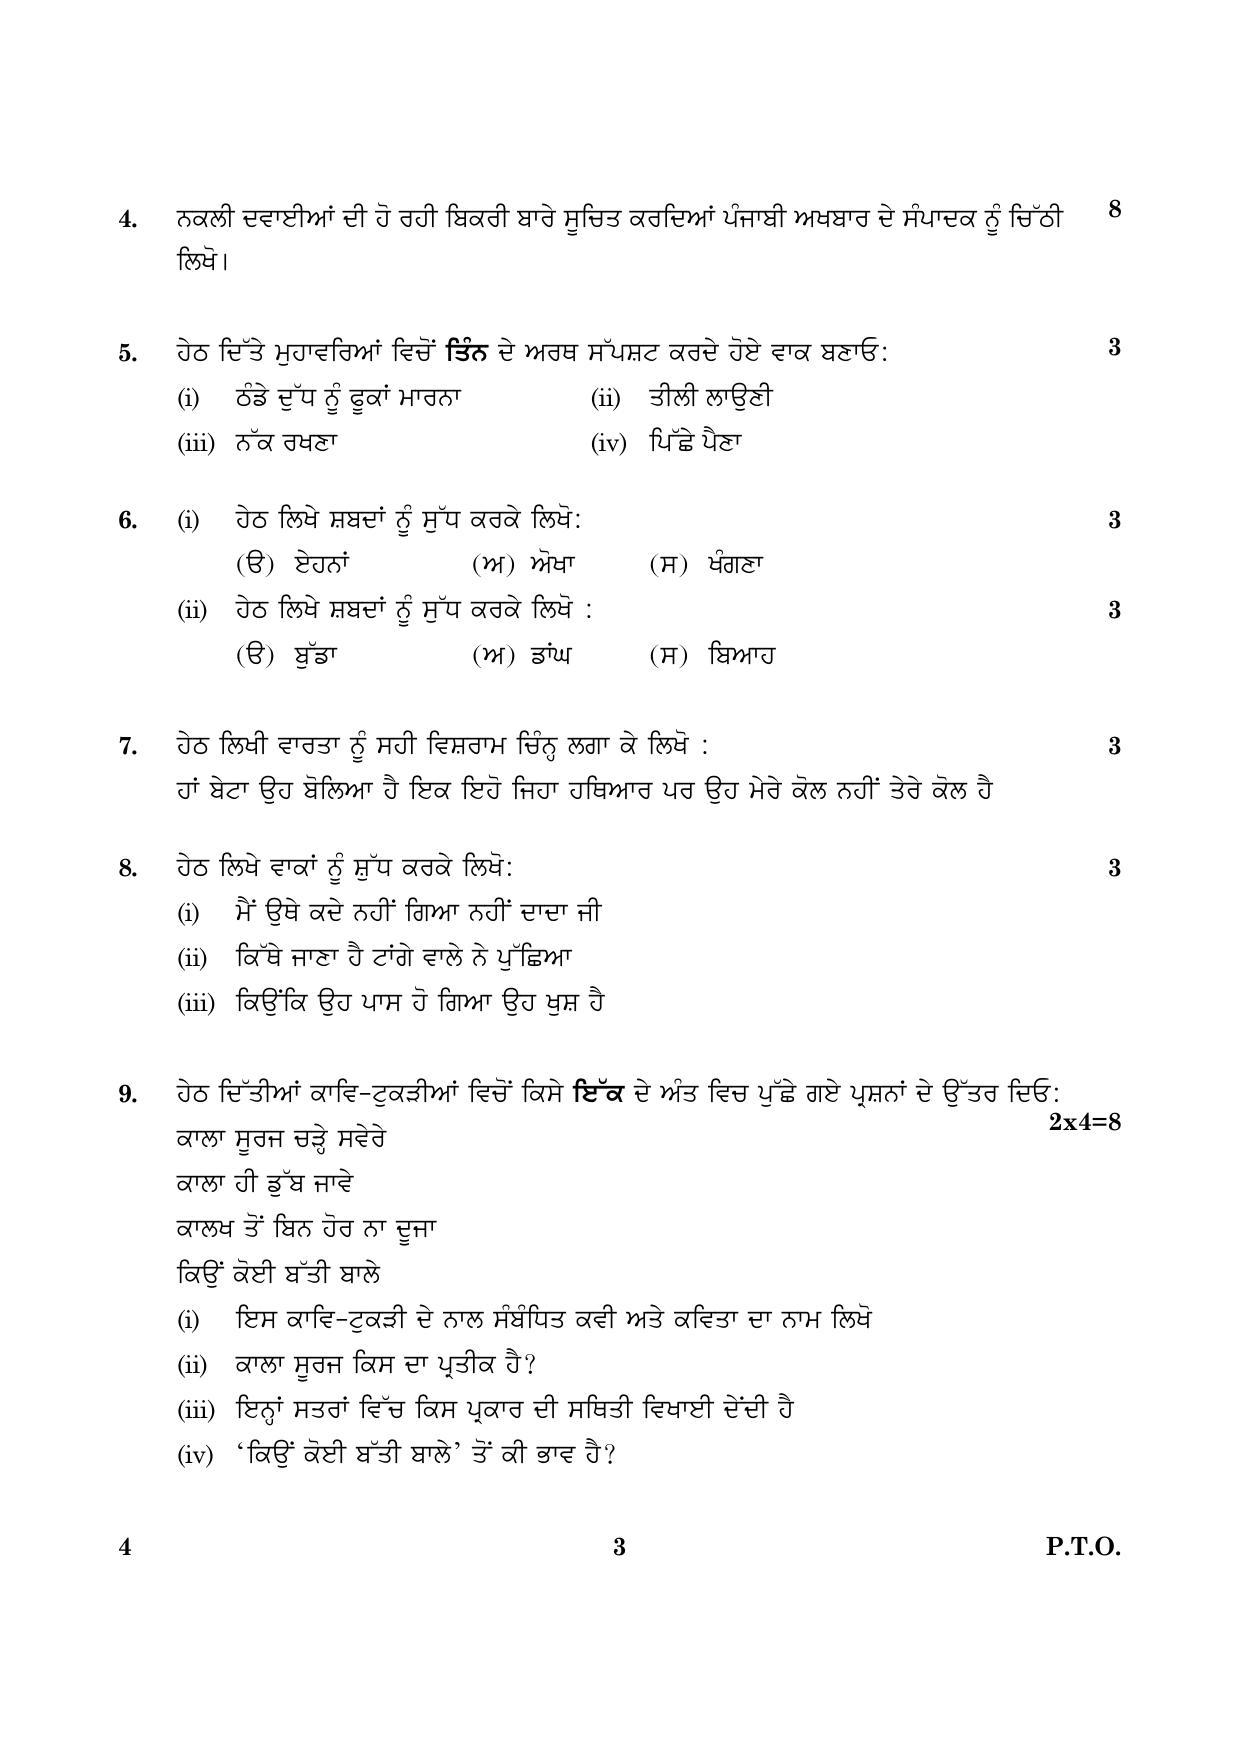 CBSE Class 12 004 Punjabi 2016 Question Paper - Page 3